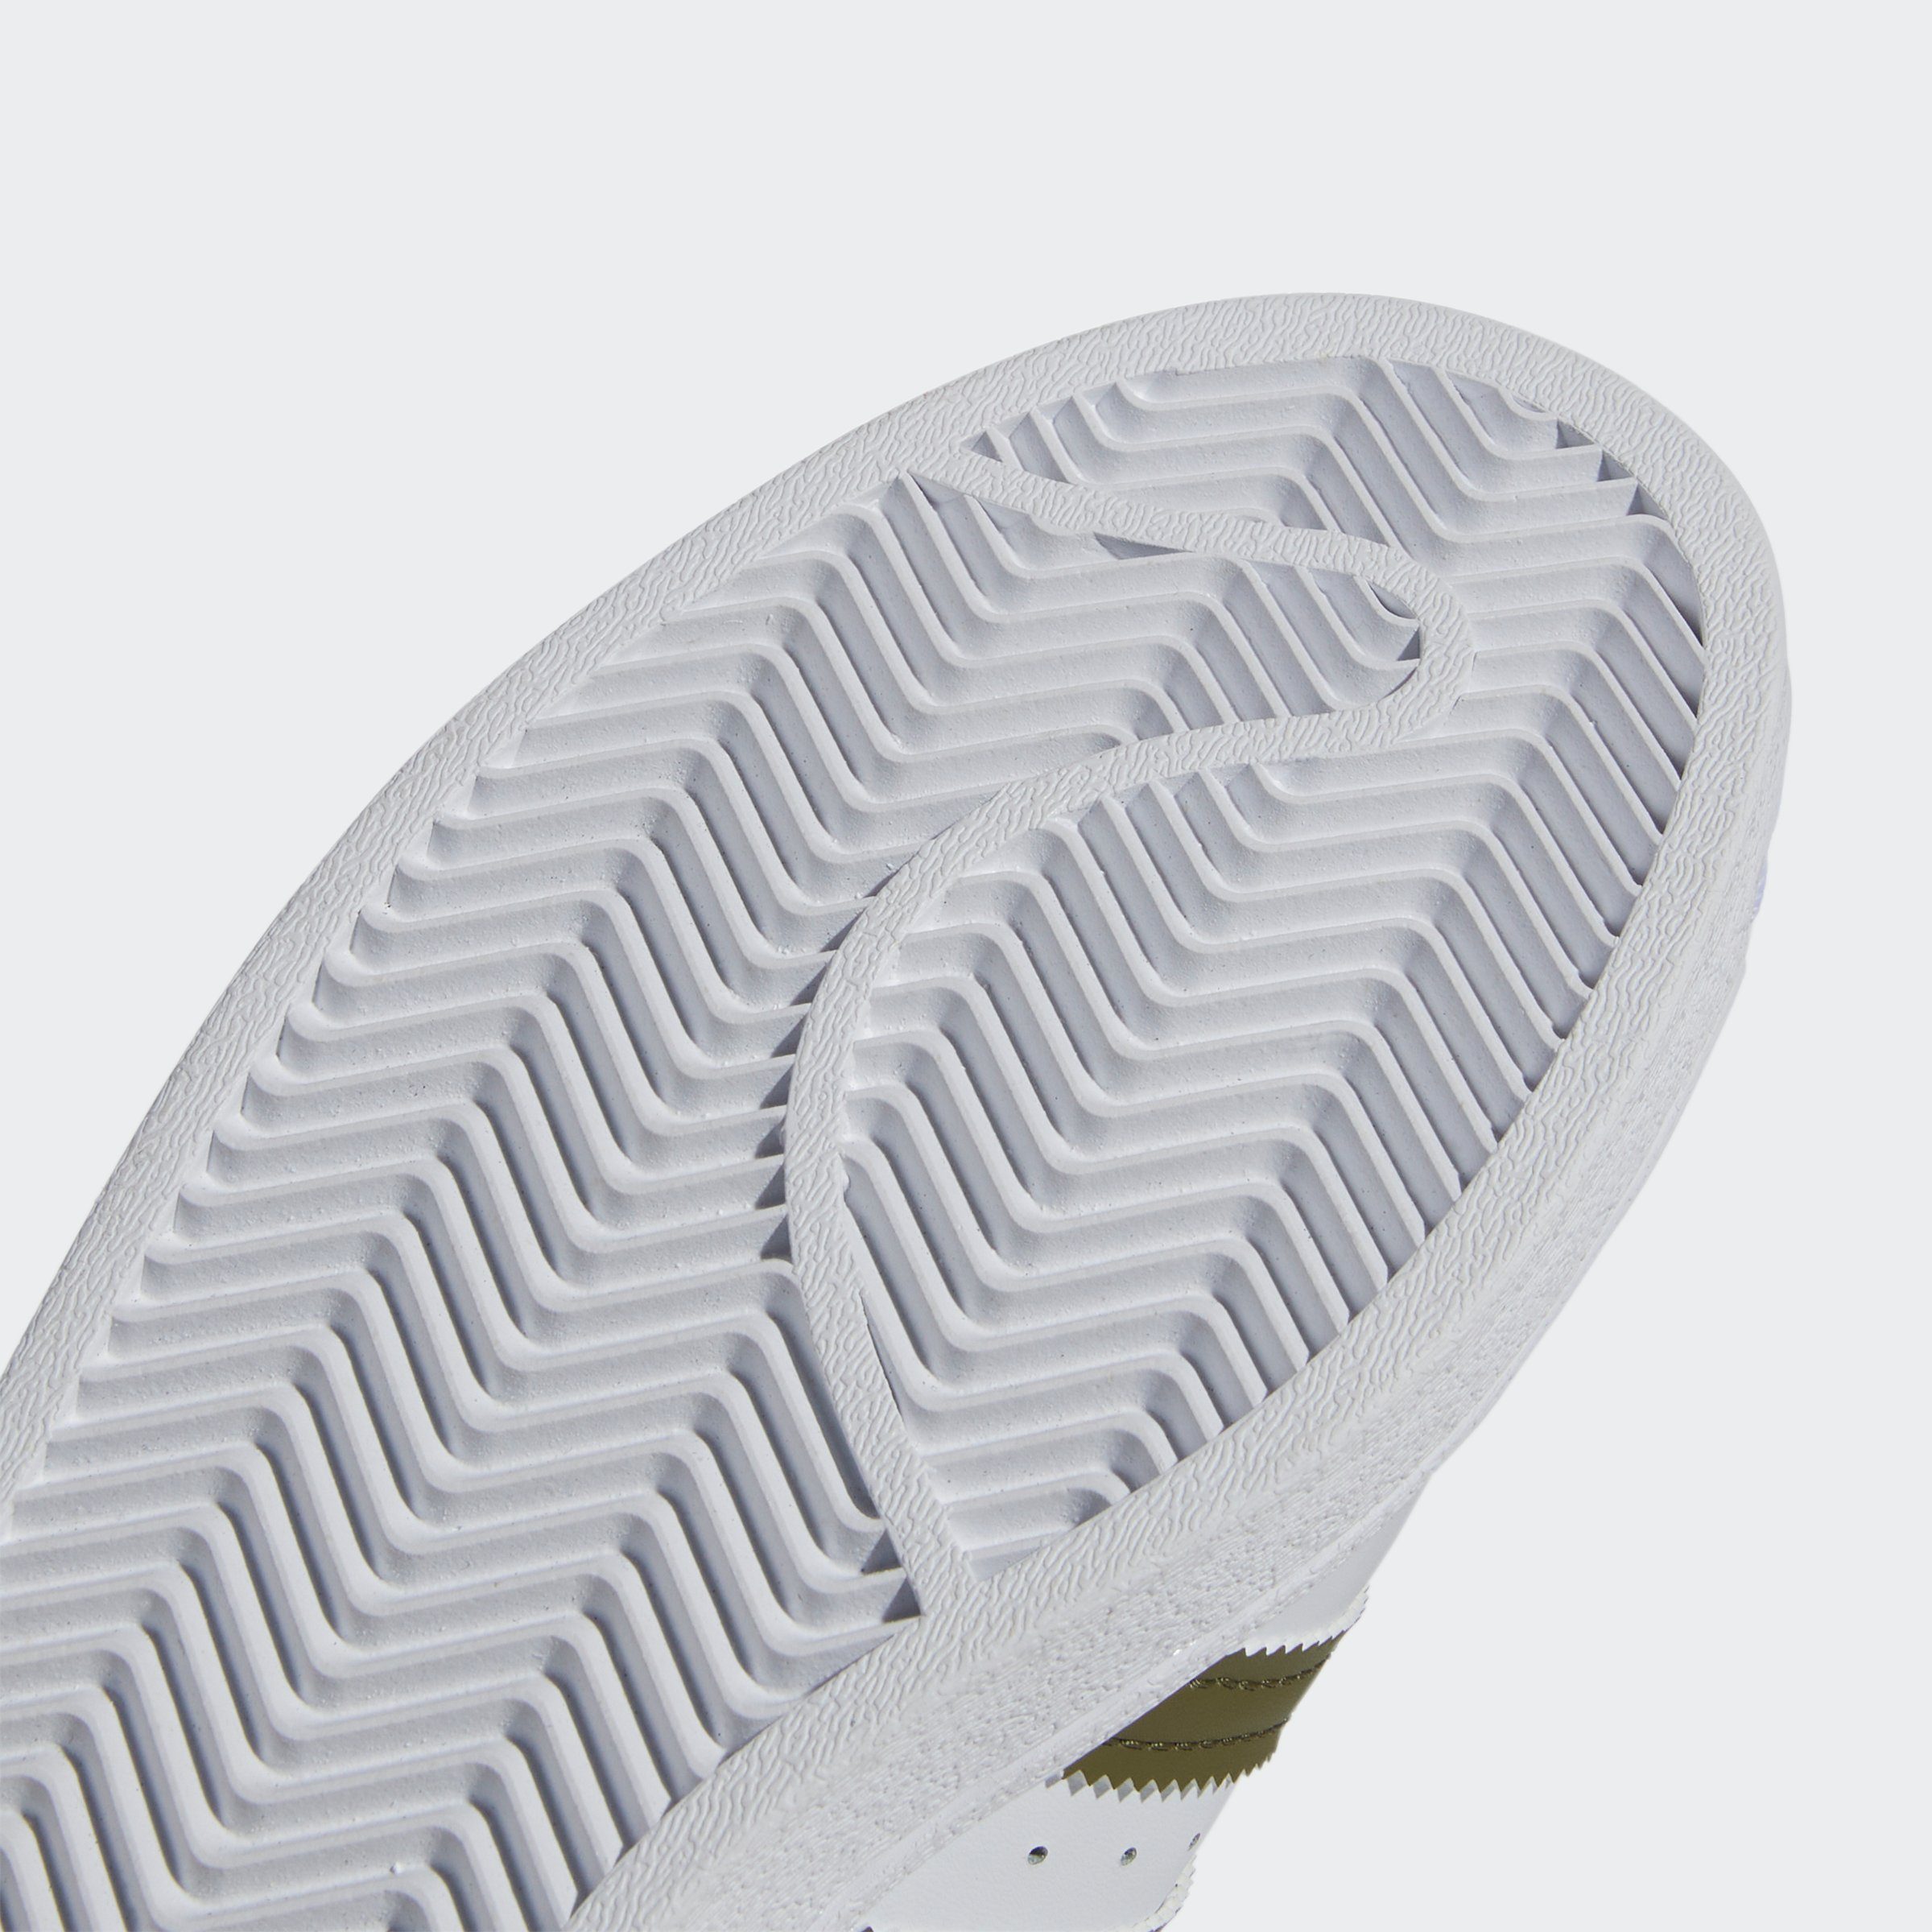 SUPERSTAR Sneaker Originals adidas weiß